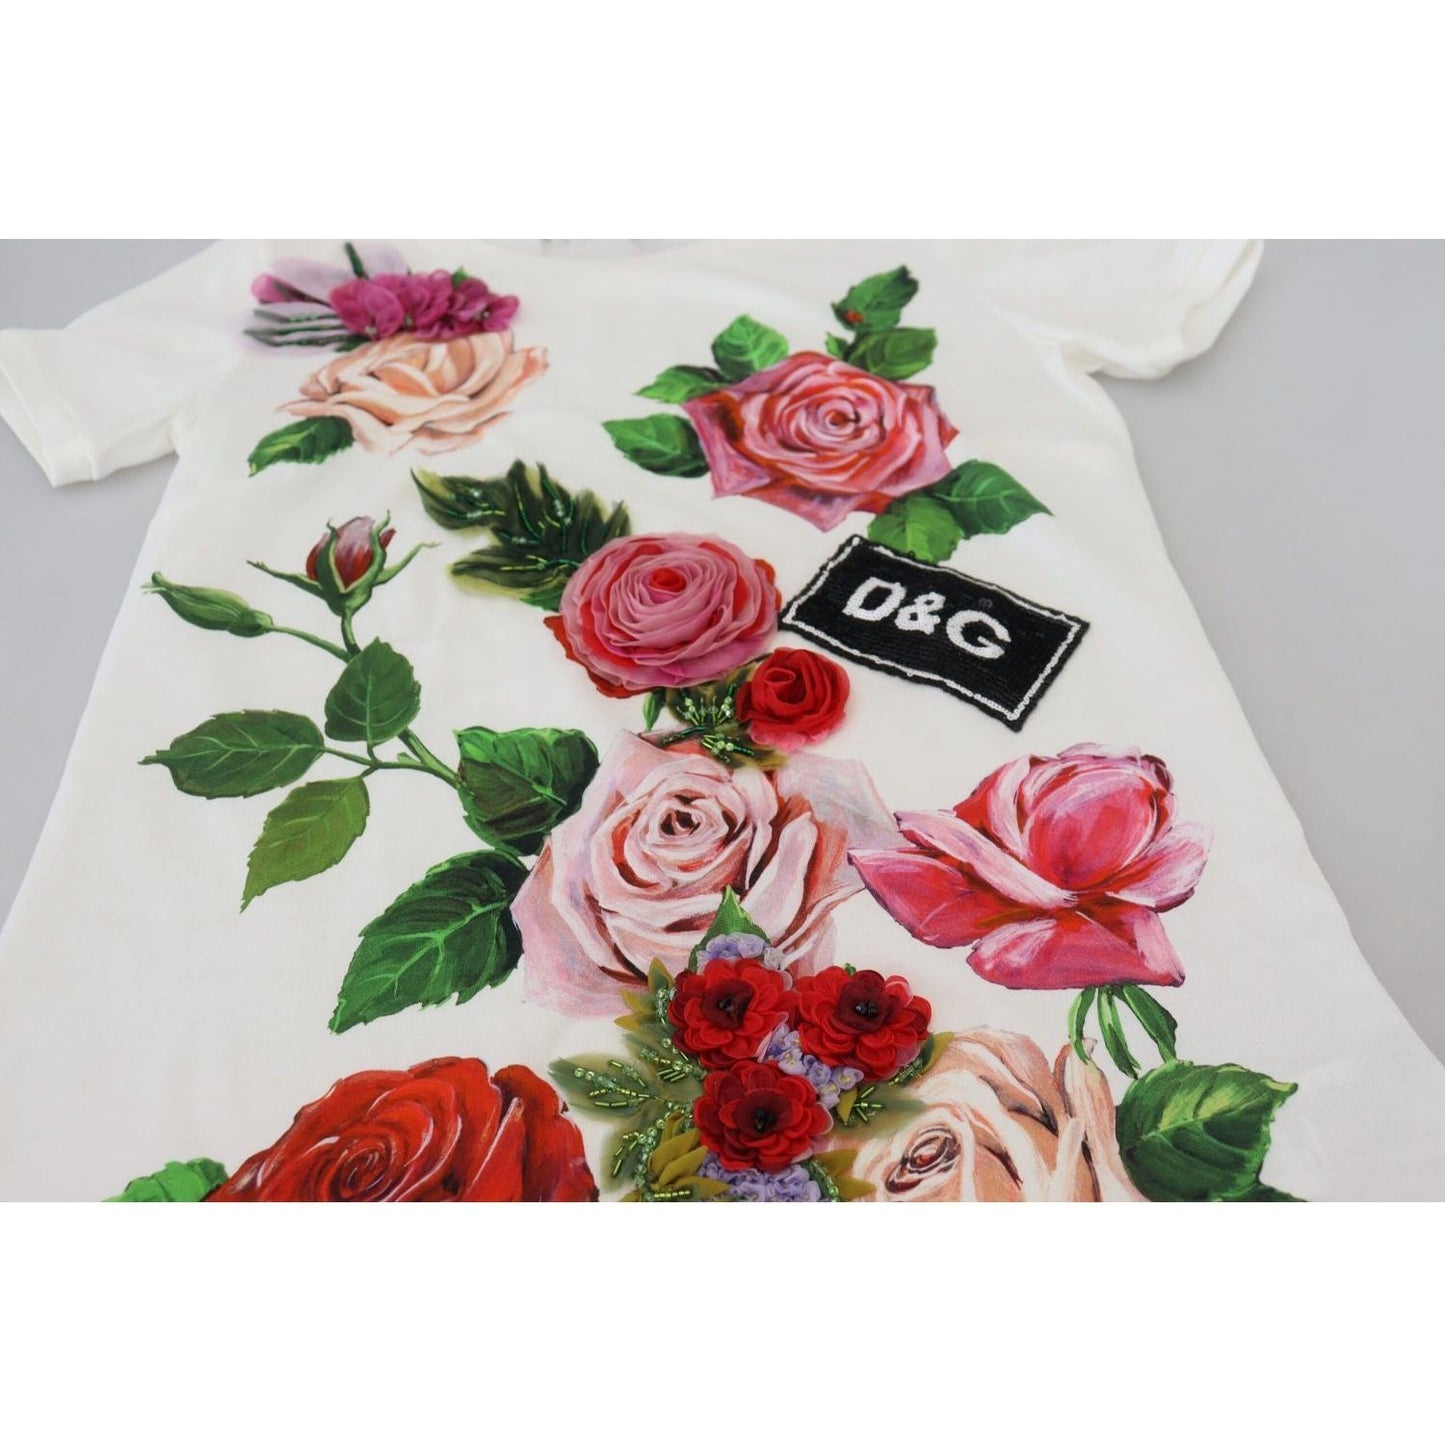 Dolce & Gabbana Elegant Multicolor Rose Print Cotton Tee white-rose-dglogo-printed-short-sleeves-top